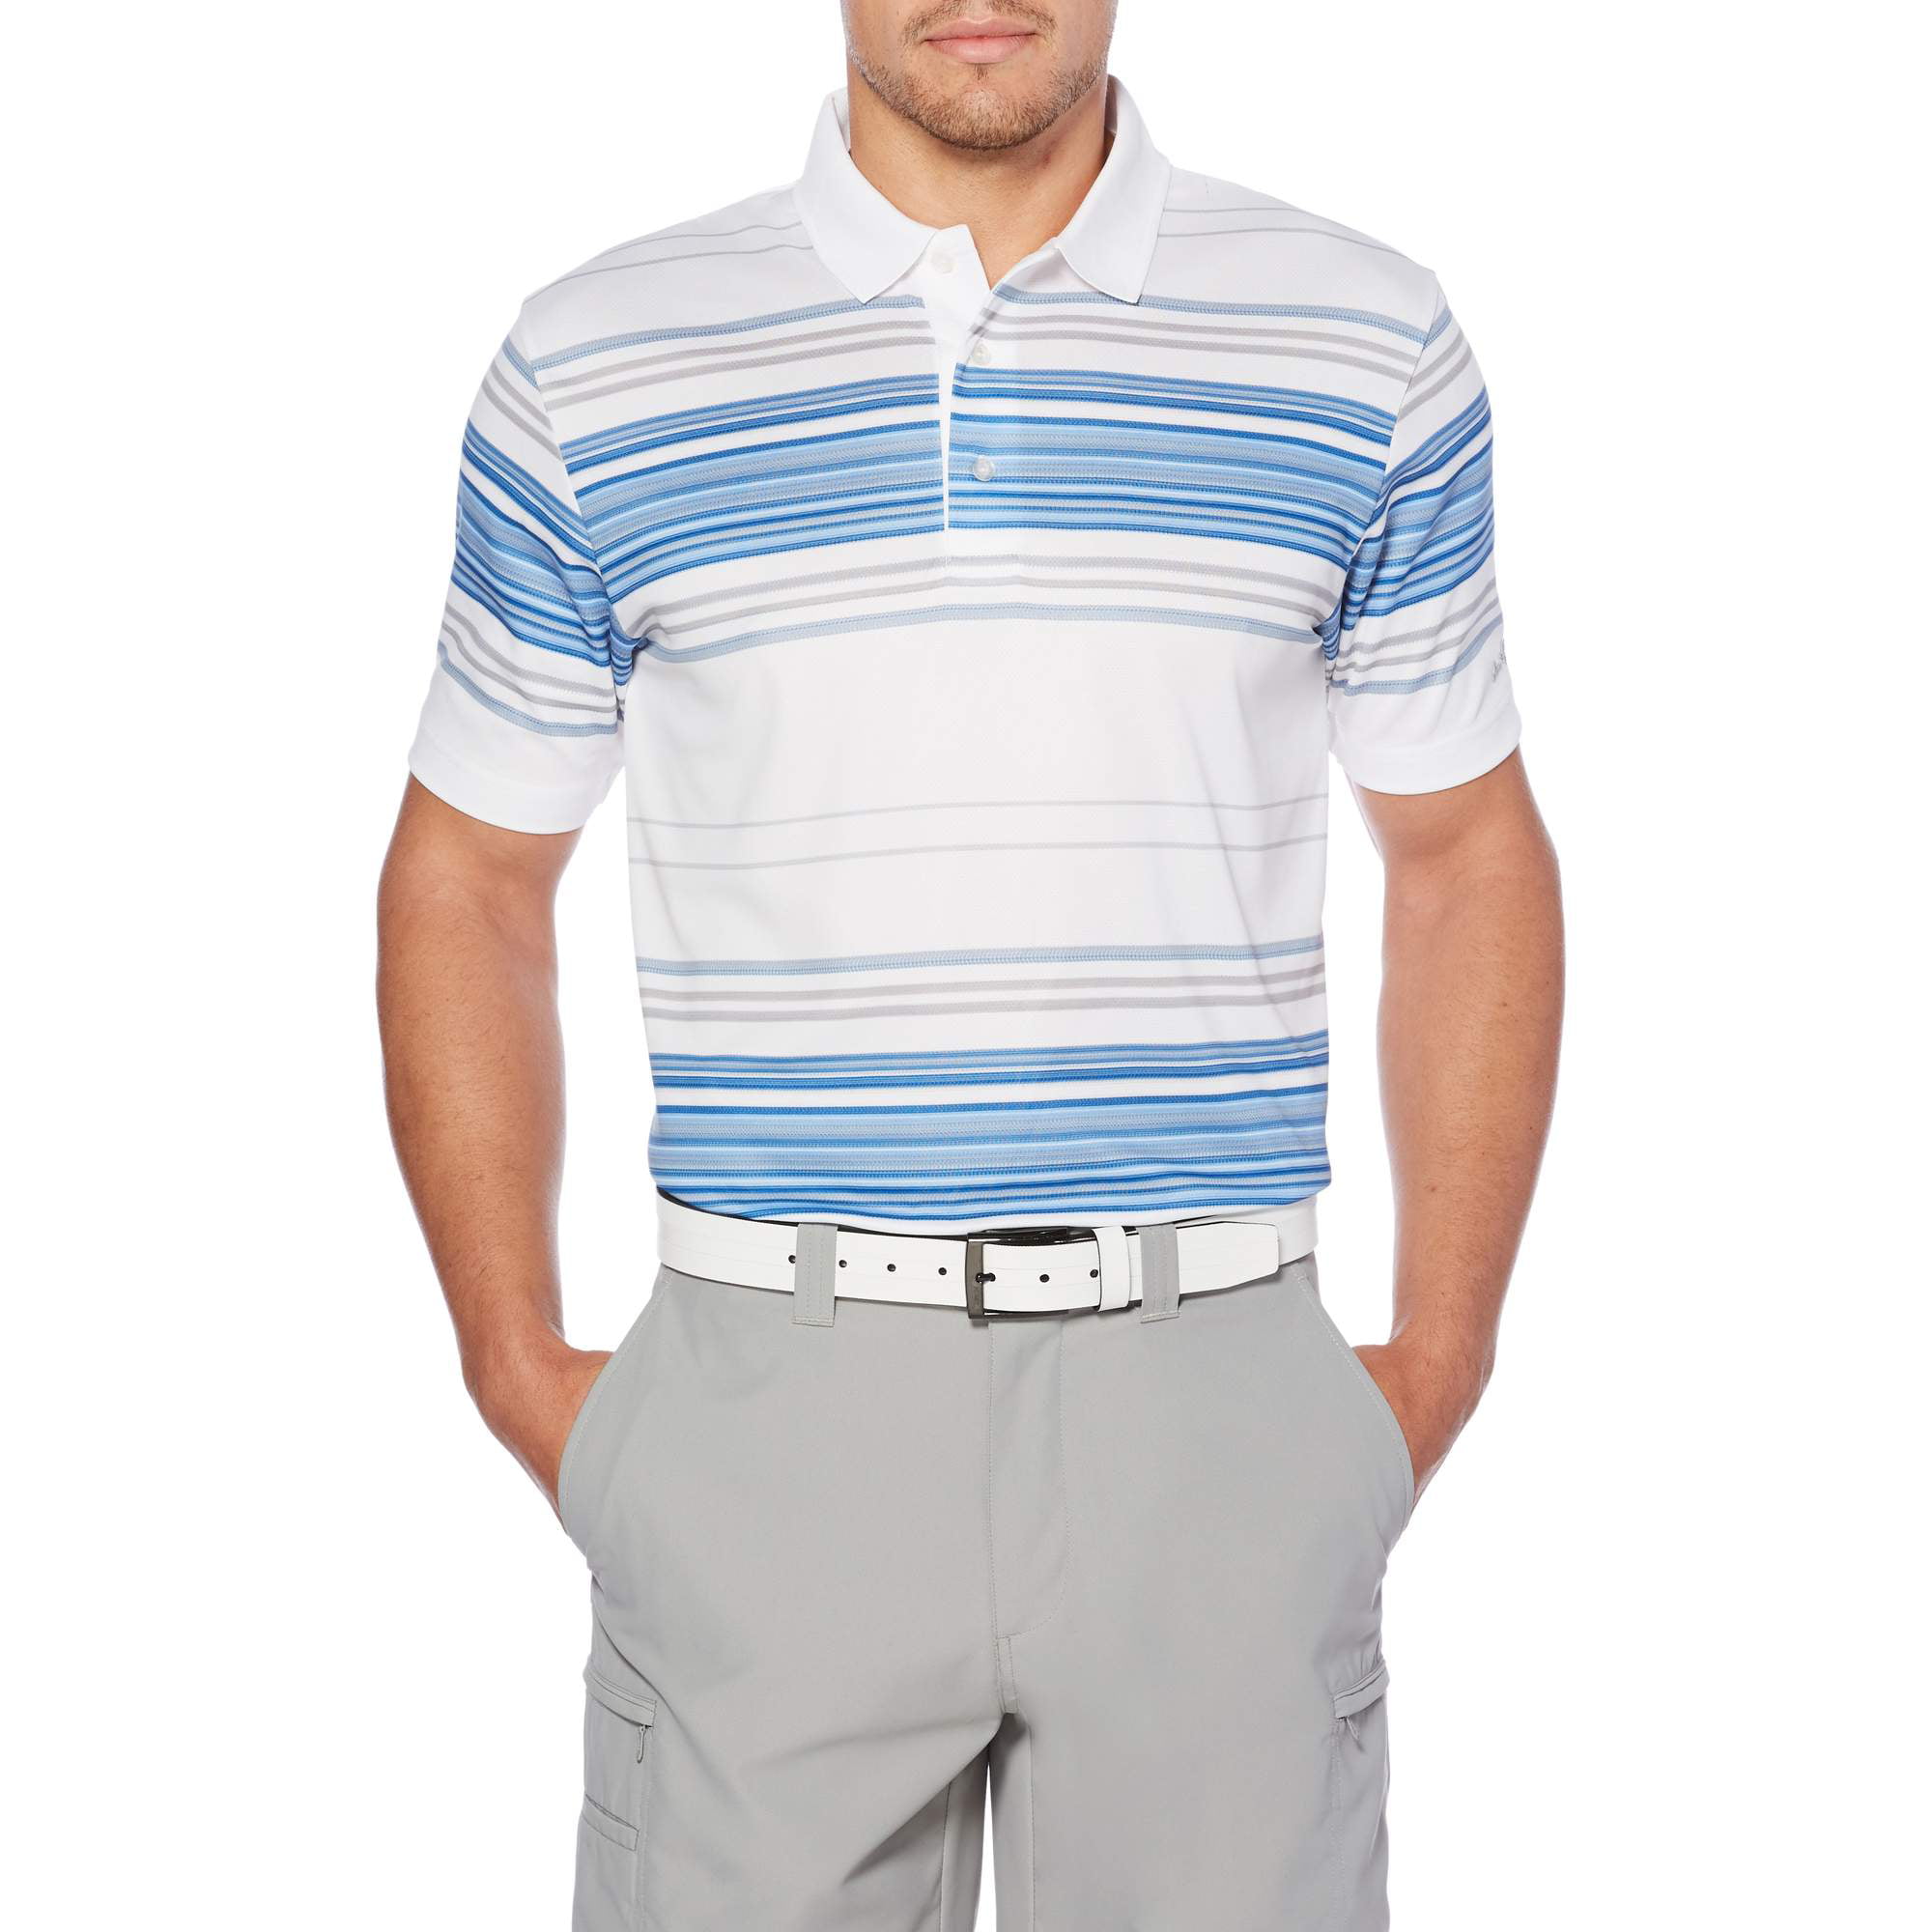 Big Men's Performance Short Sleeve Stripe Golf Polo Shirt - Walmart.com